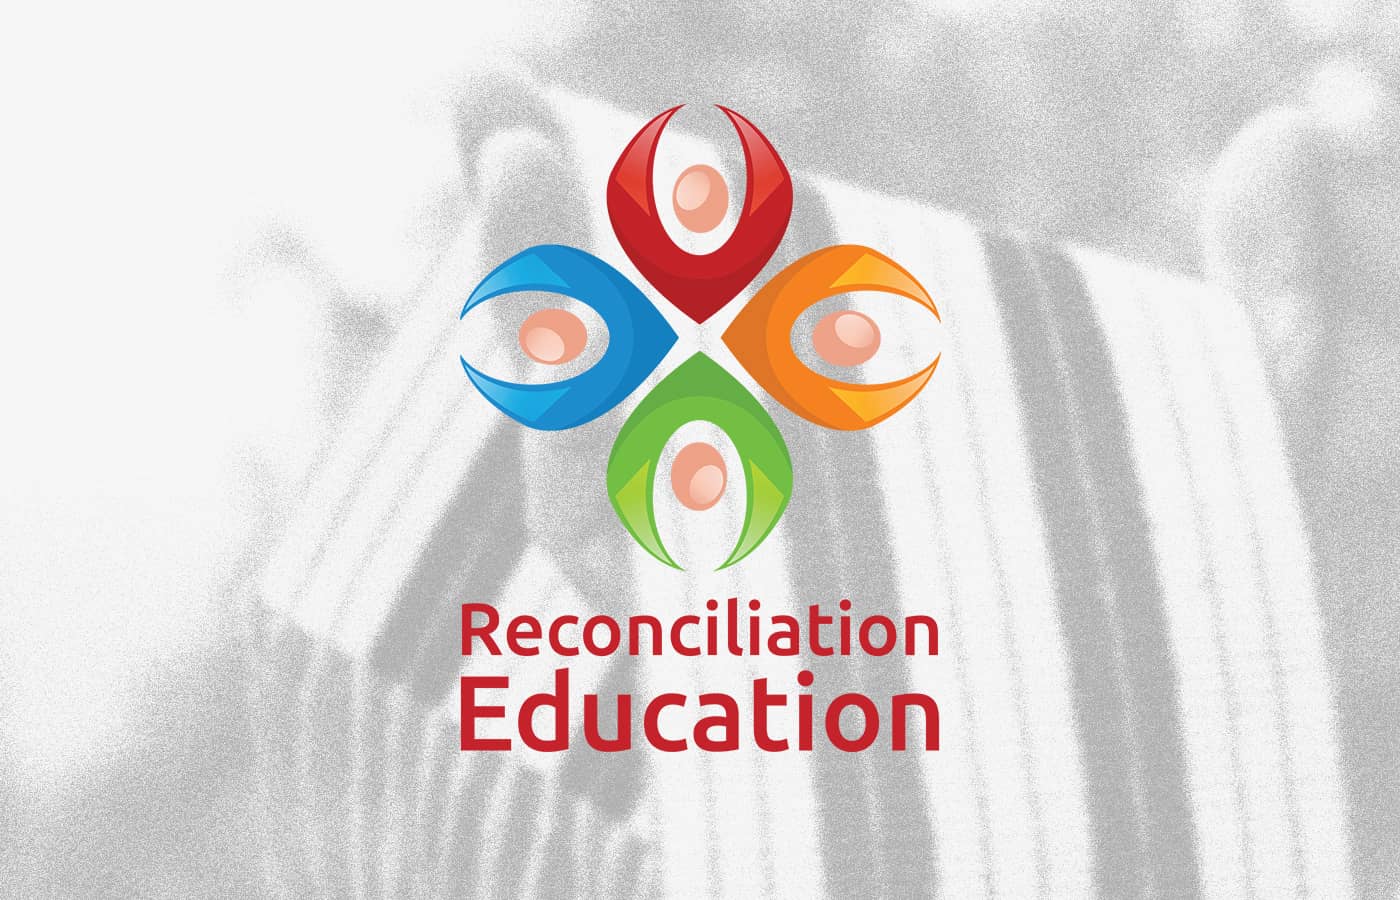 Reconciliation Education logo on grainy background